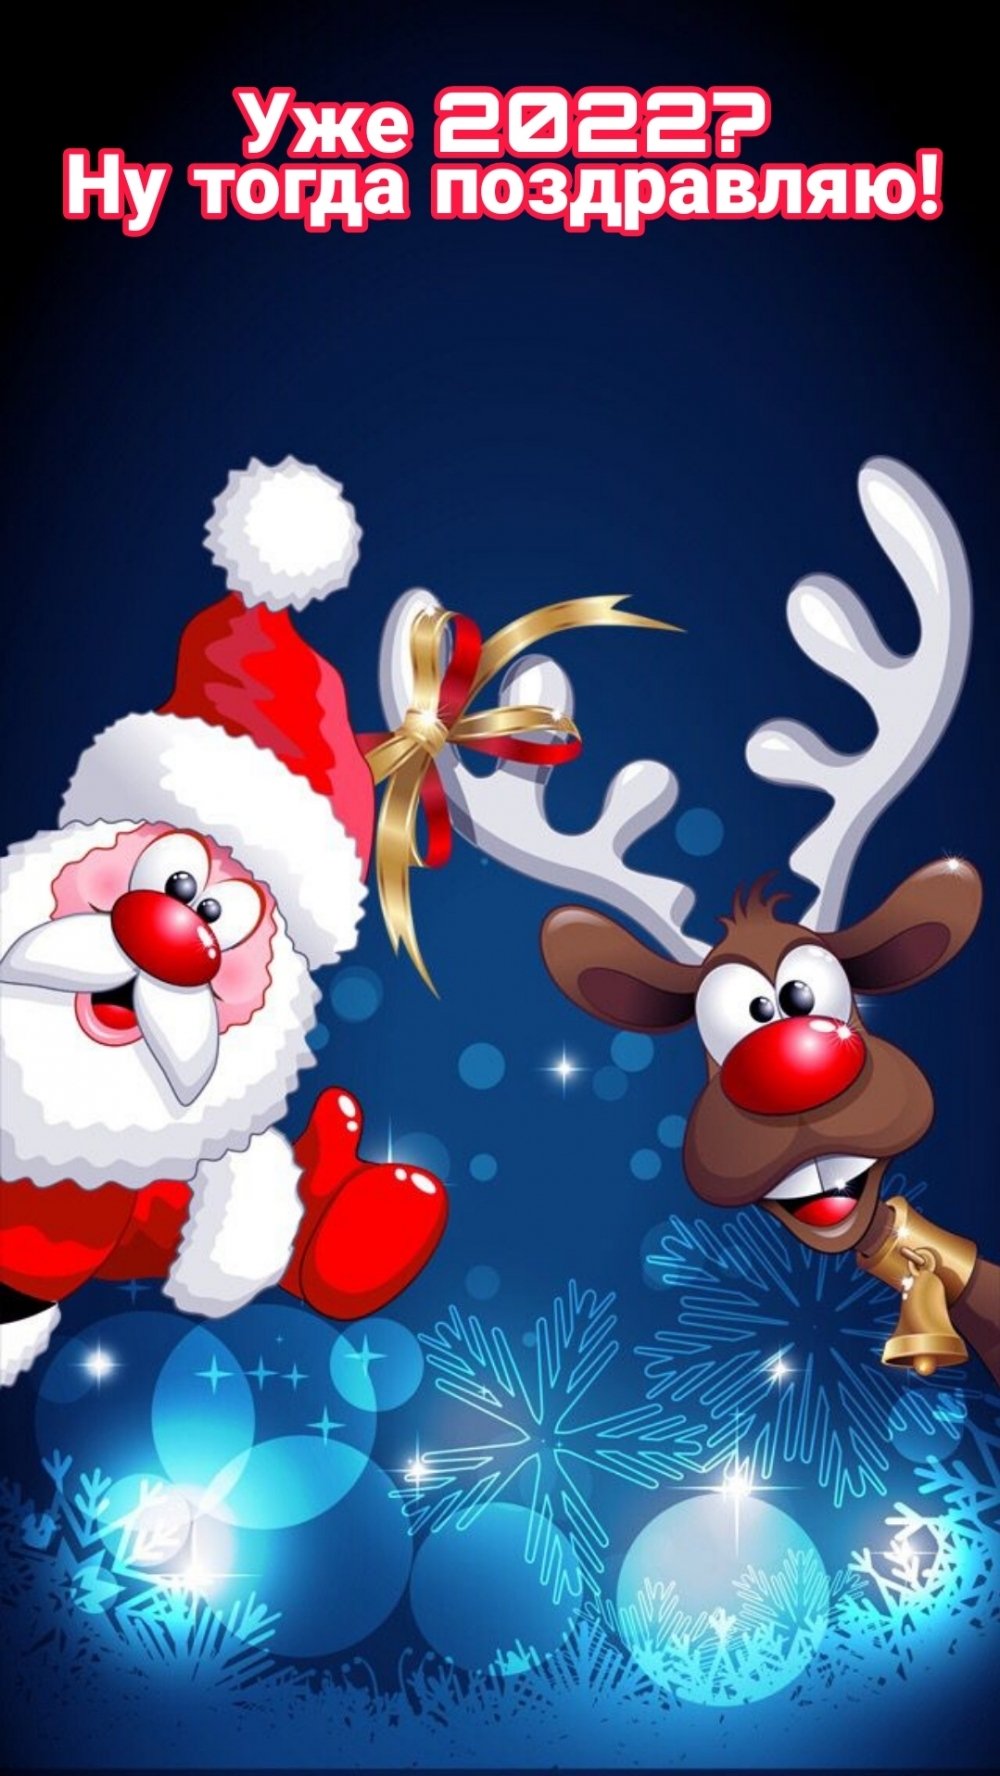 Дед Мороз с оленями